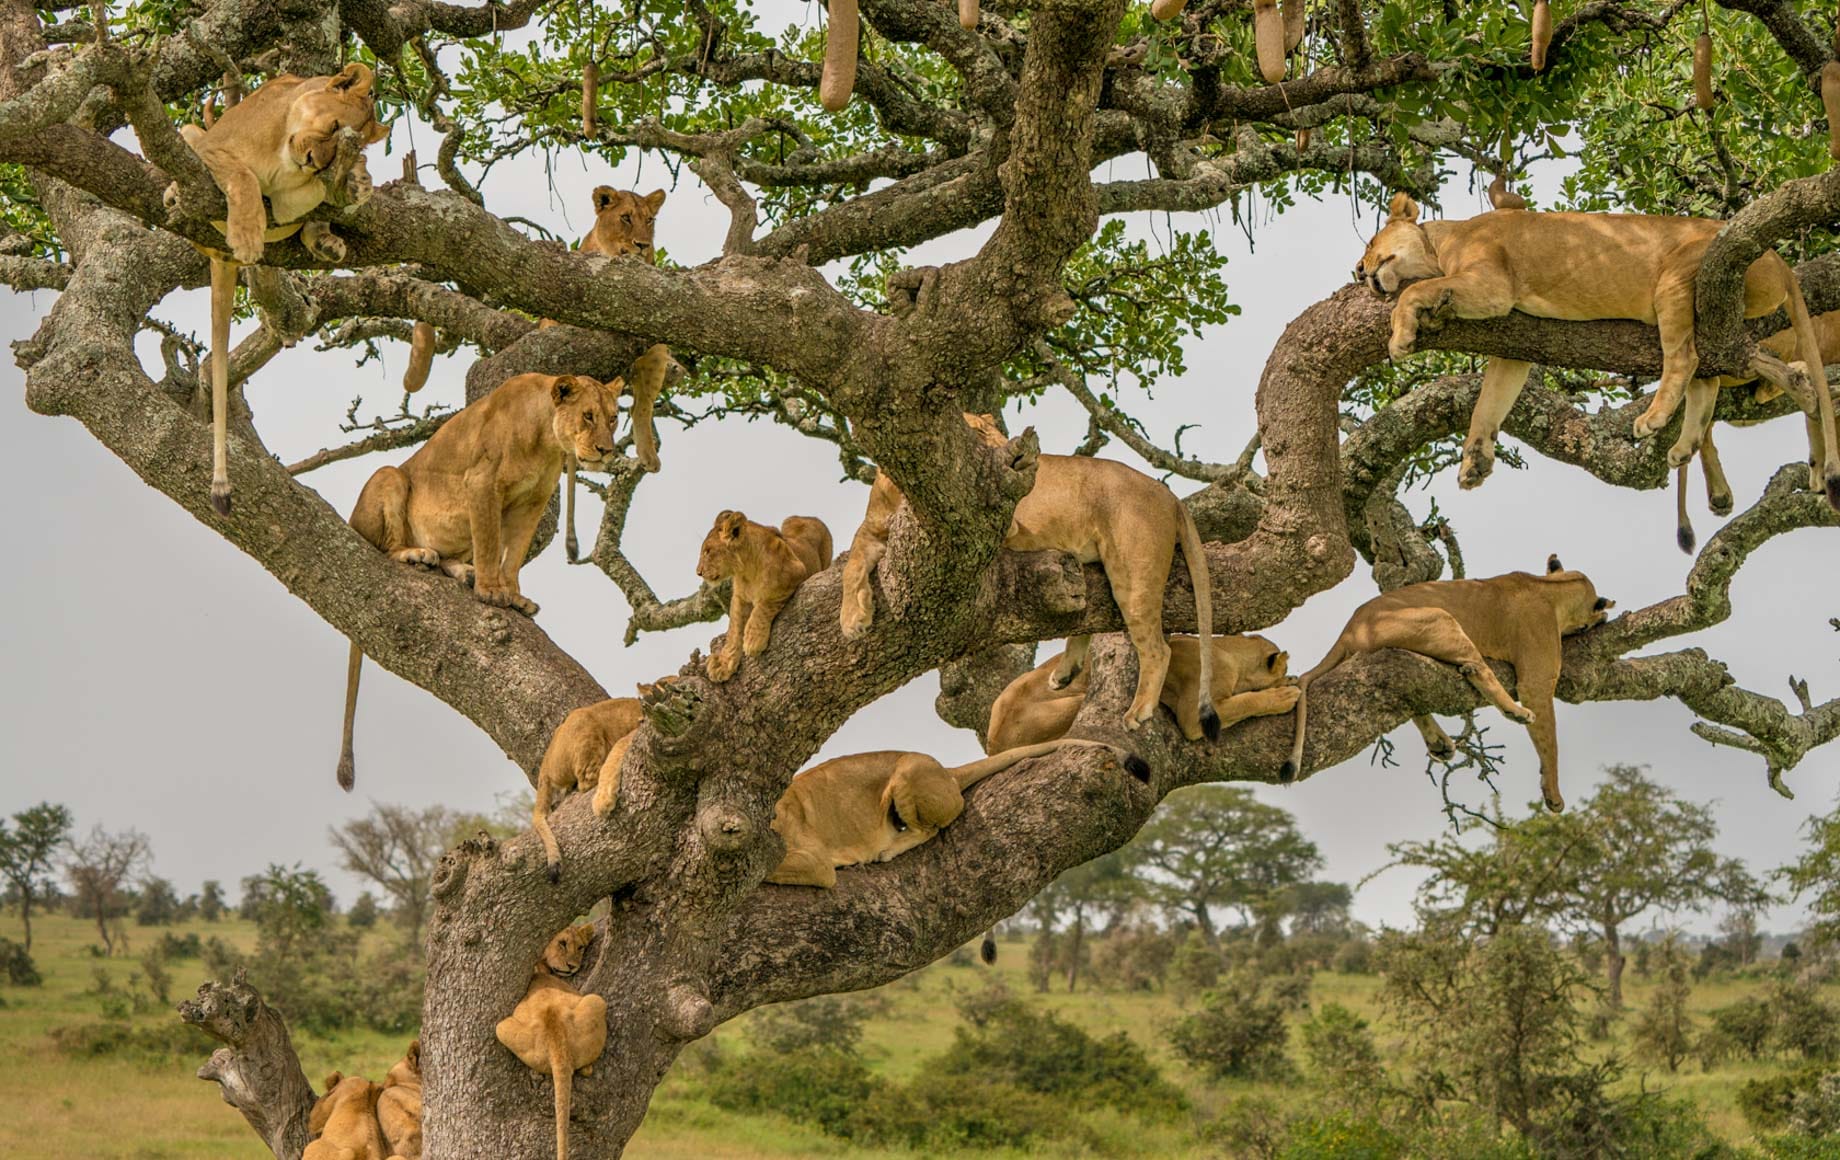 Group of young Lions in Serengeti safari, Tanzania